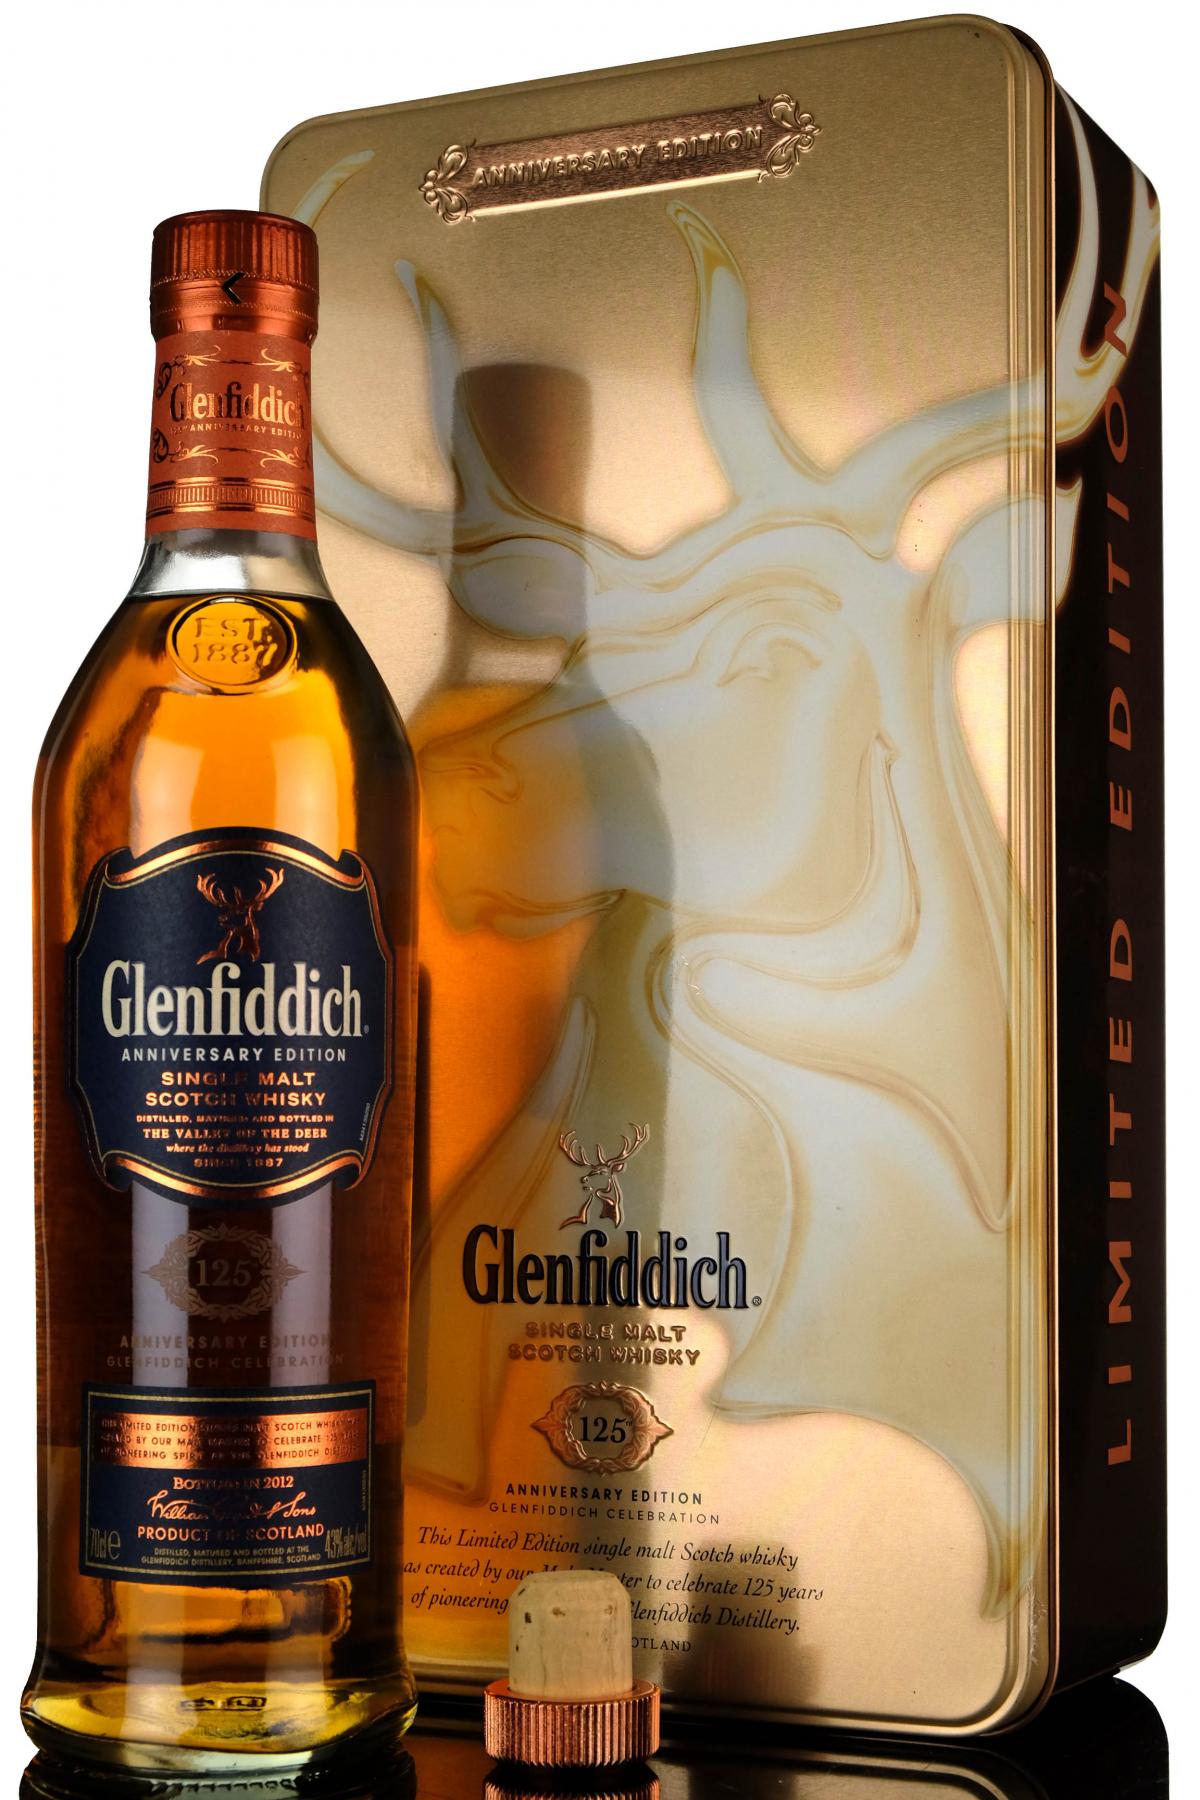 Glenfiddich 125th Anniversary